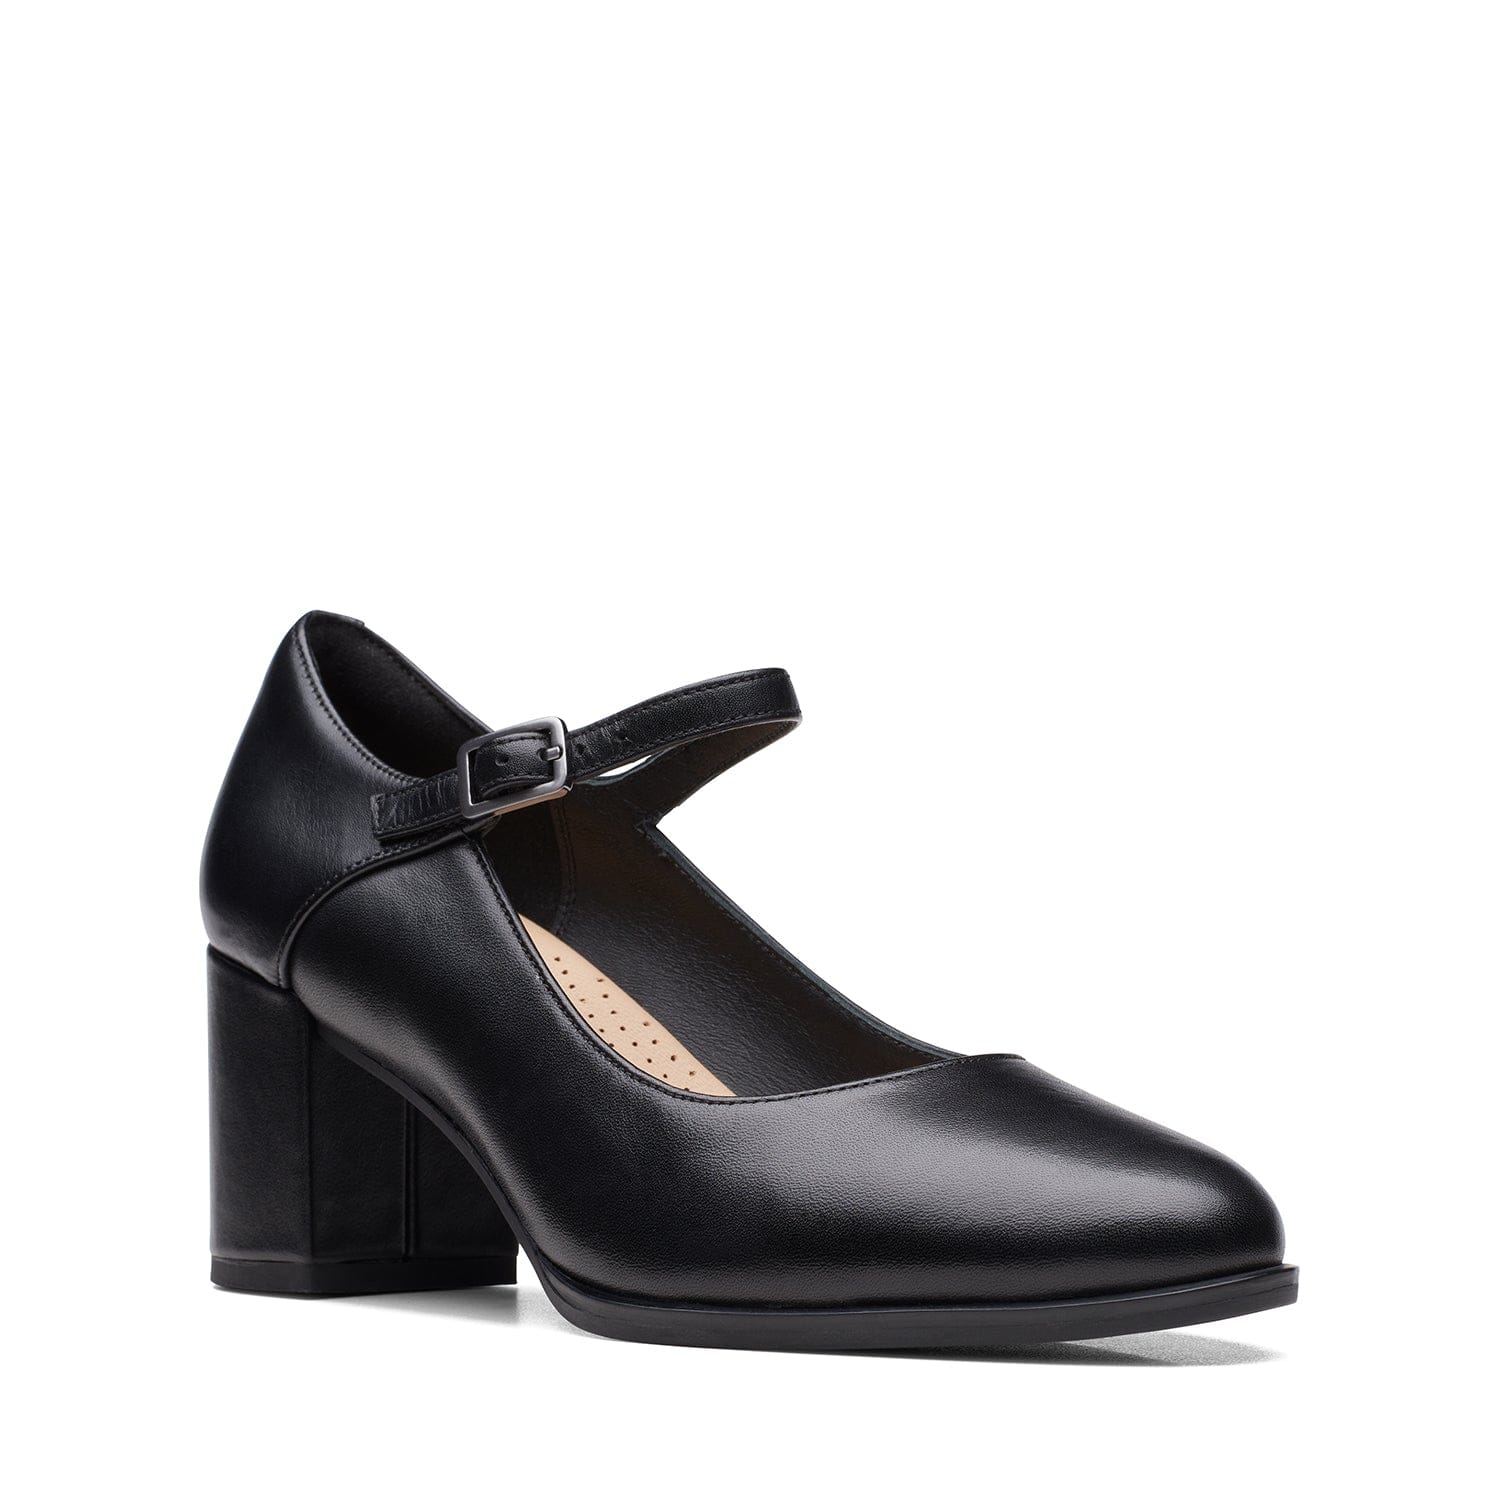 Clarks Freva55 Strap - Shoes - Black Leather - 261720525 - E Width (Wide Fit)